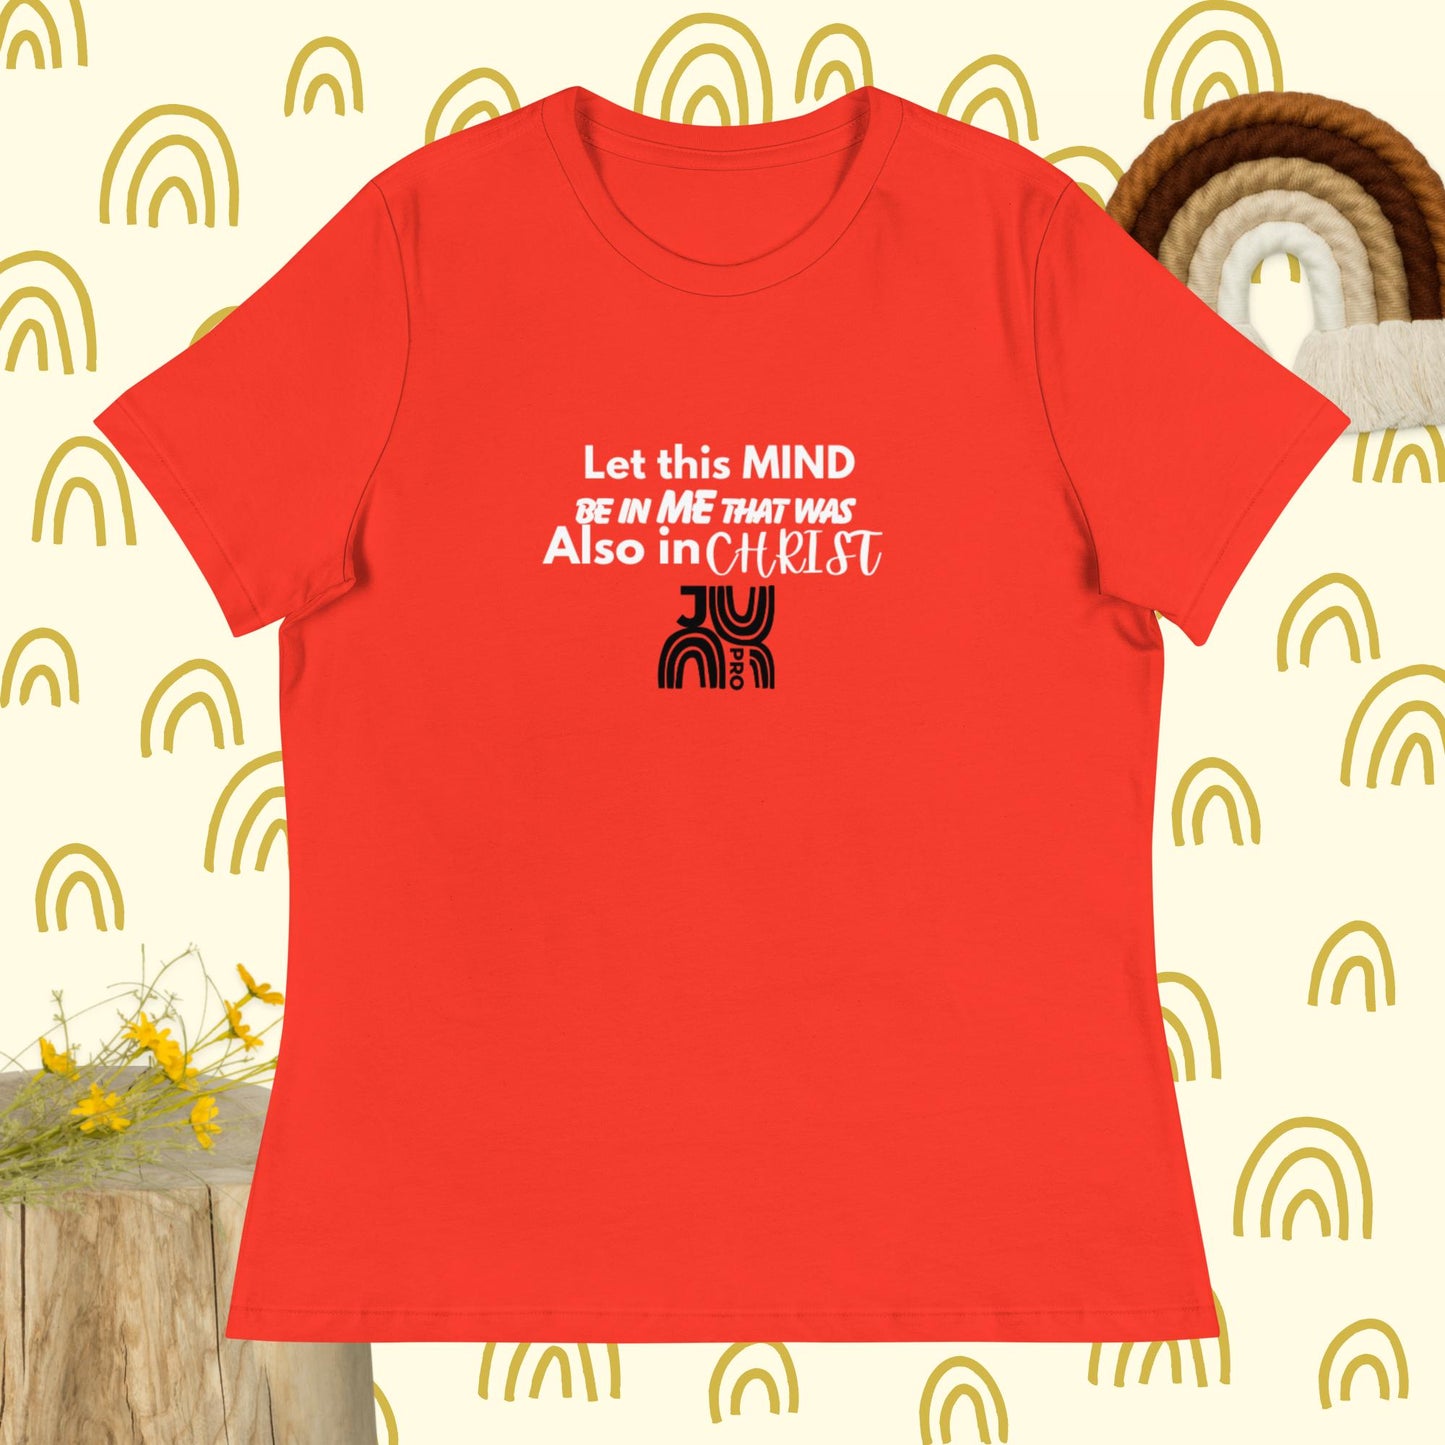 Faith Women's T-Shirt